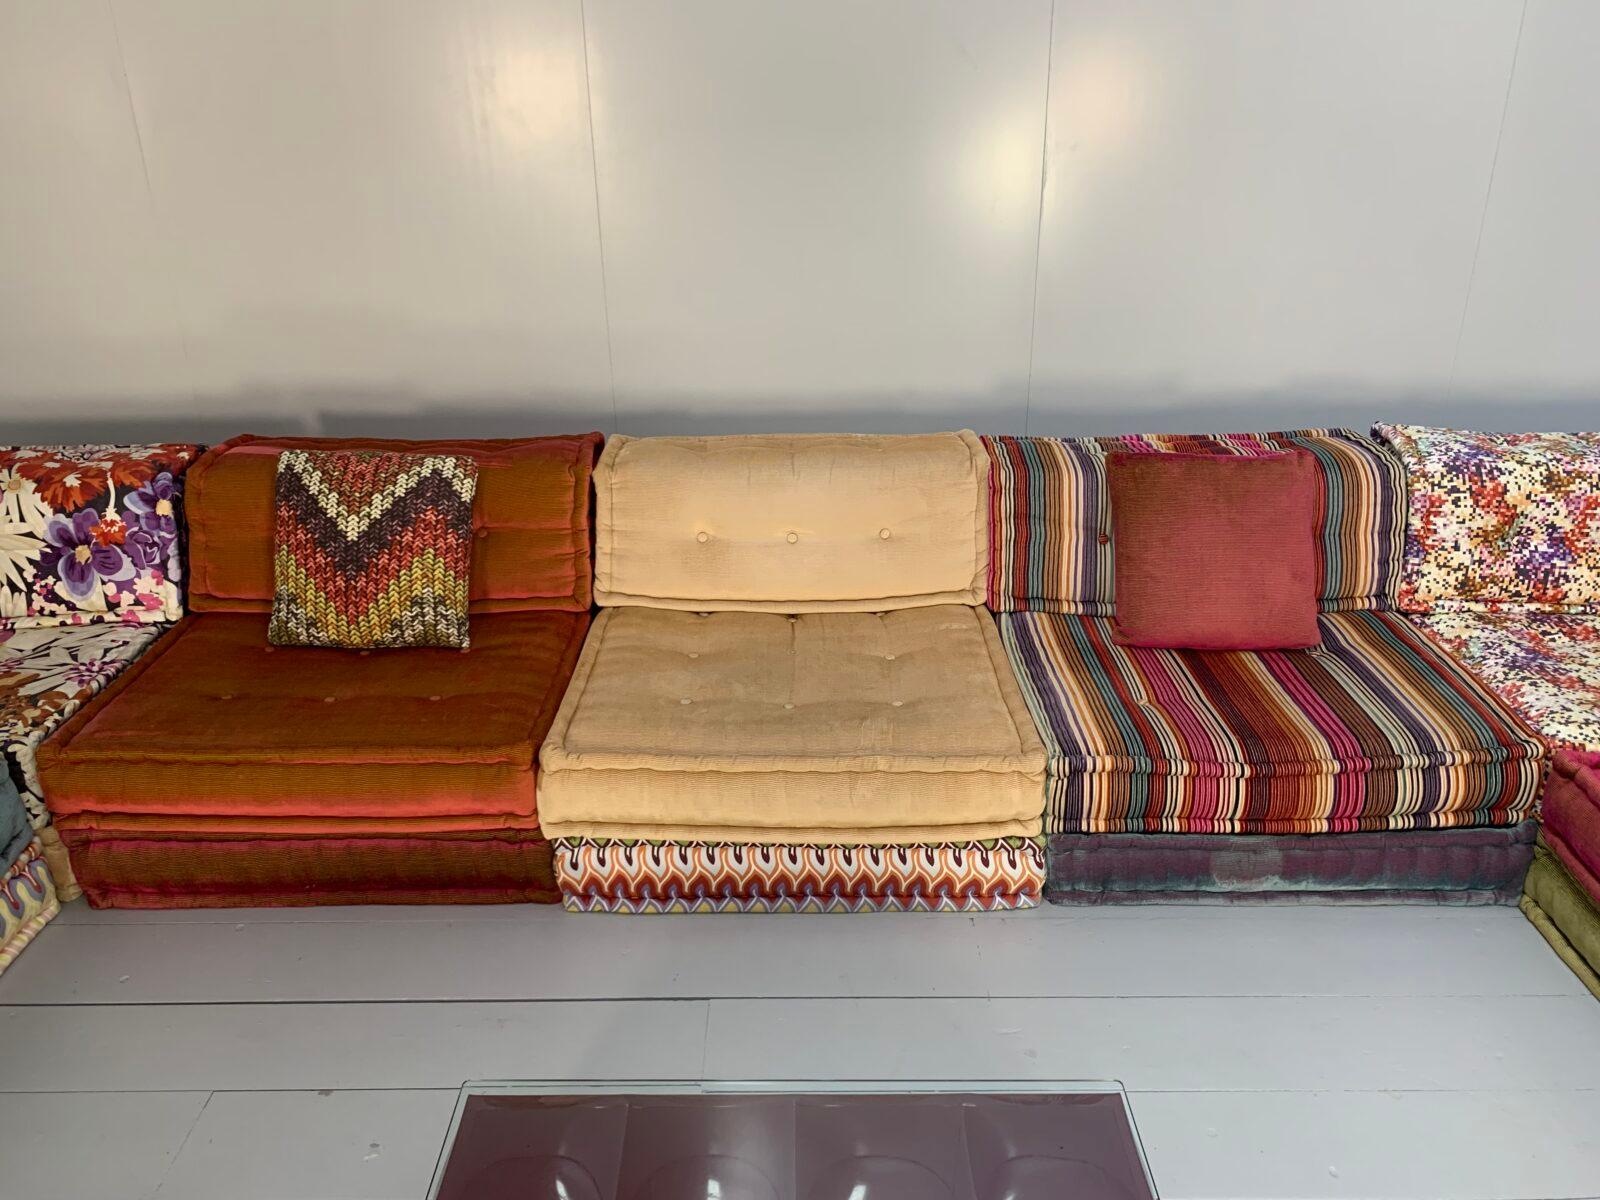 Roche Bobois “Mah Jong” Sofa & Table – In Missoni Fabric In Good Condition For Sale In Barrowford, GB